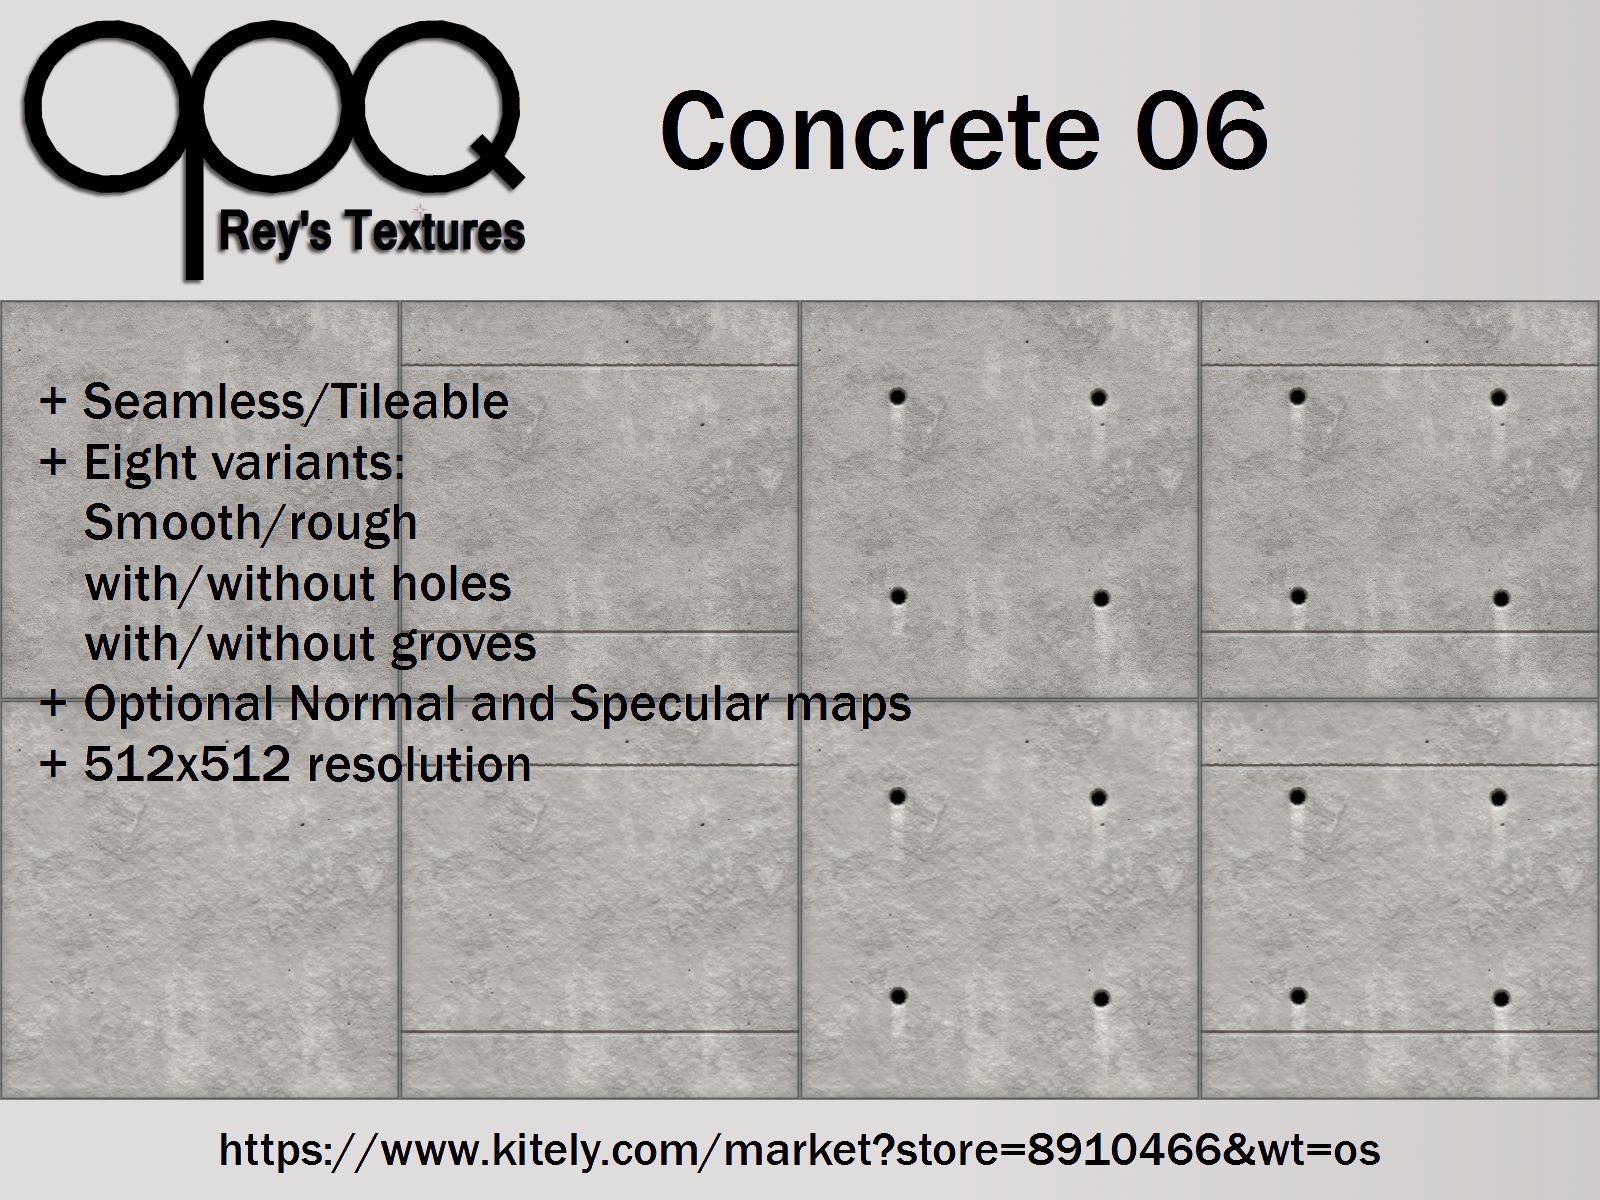 Rey's Concrete 06 Poster Kitely.jpg